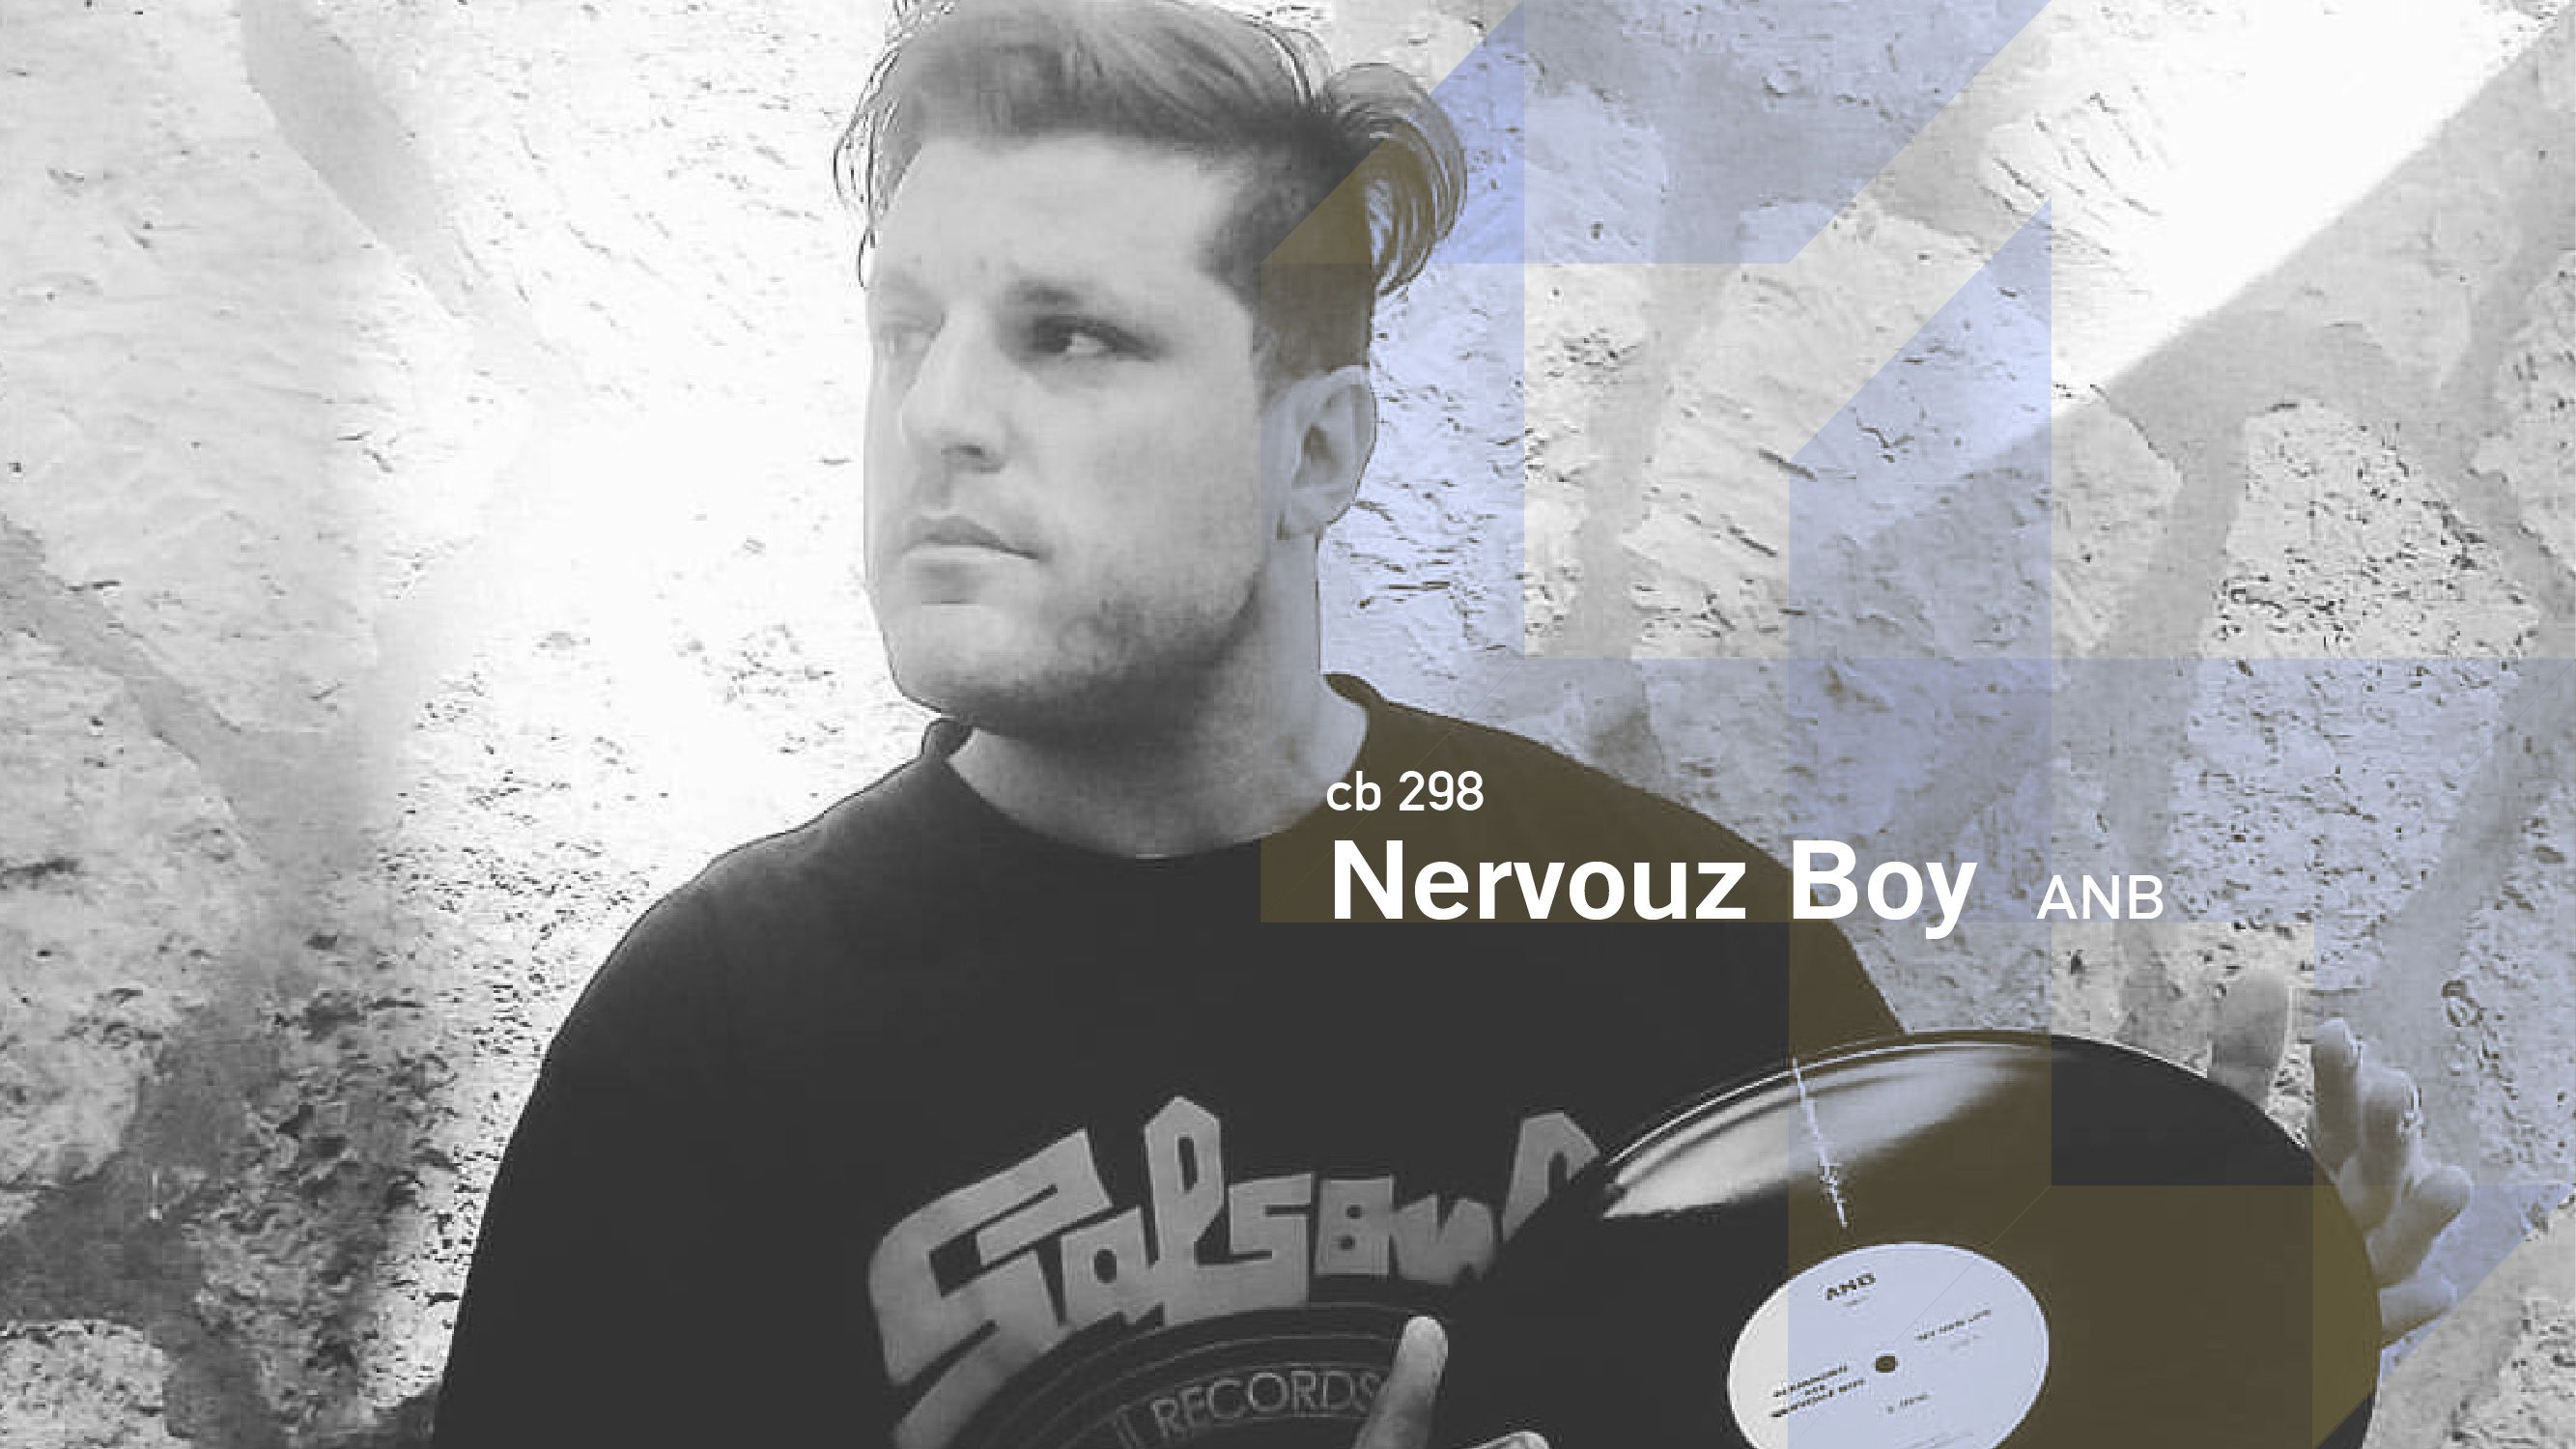 CB 298 - Nervouz Boy